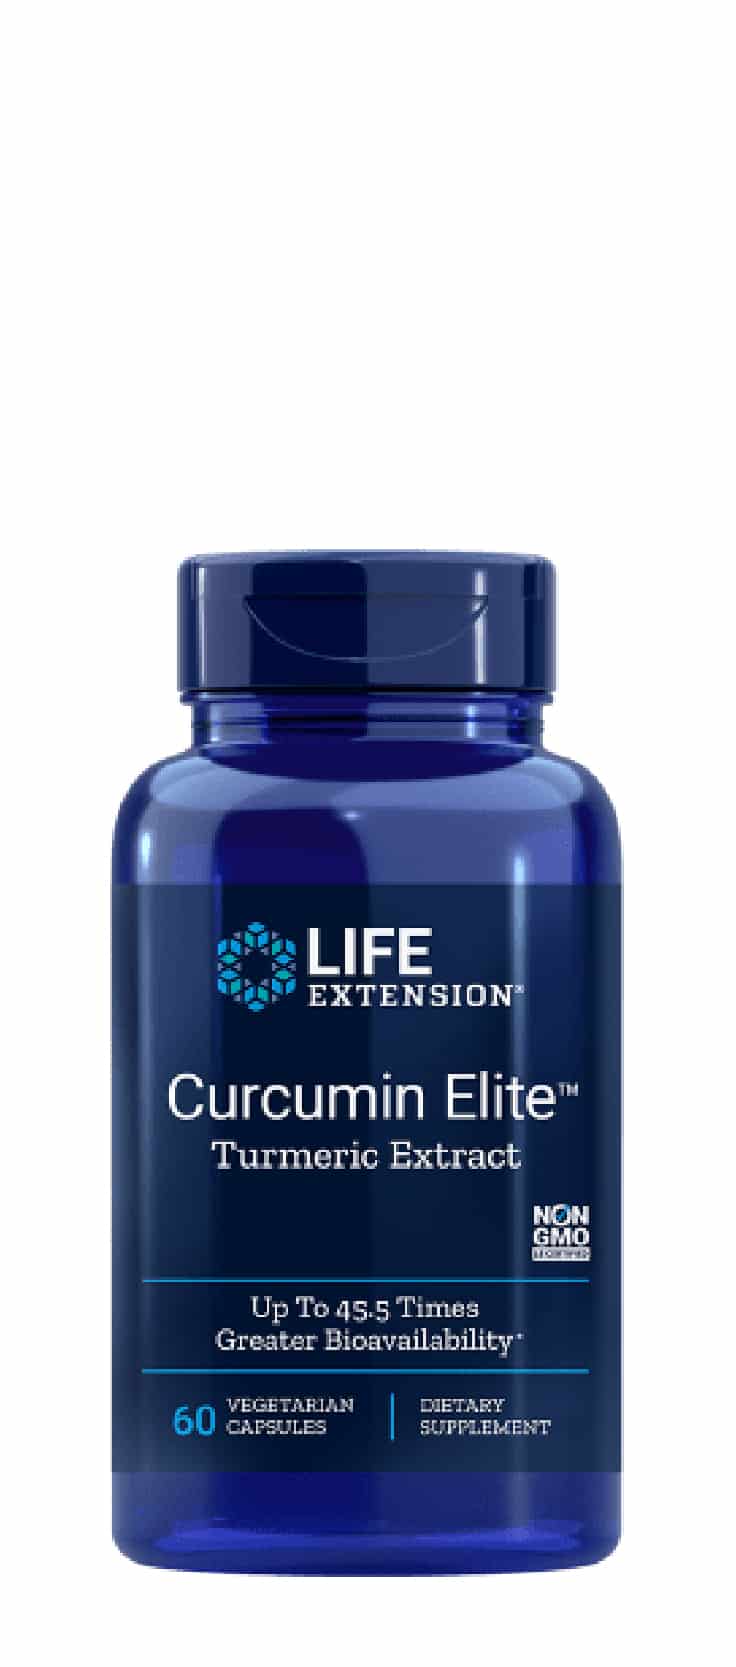 Life Extension Curcumin Elite bei LiveHelfi kaufen